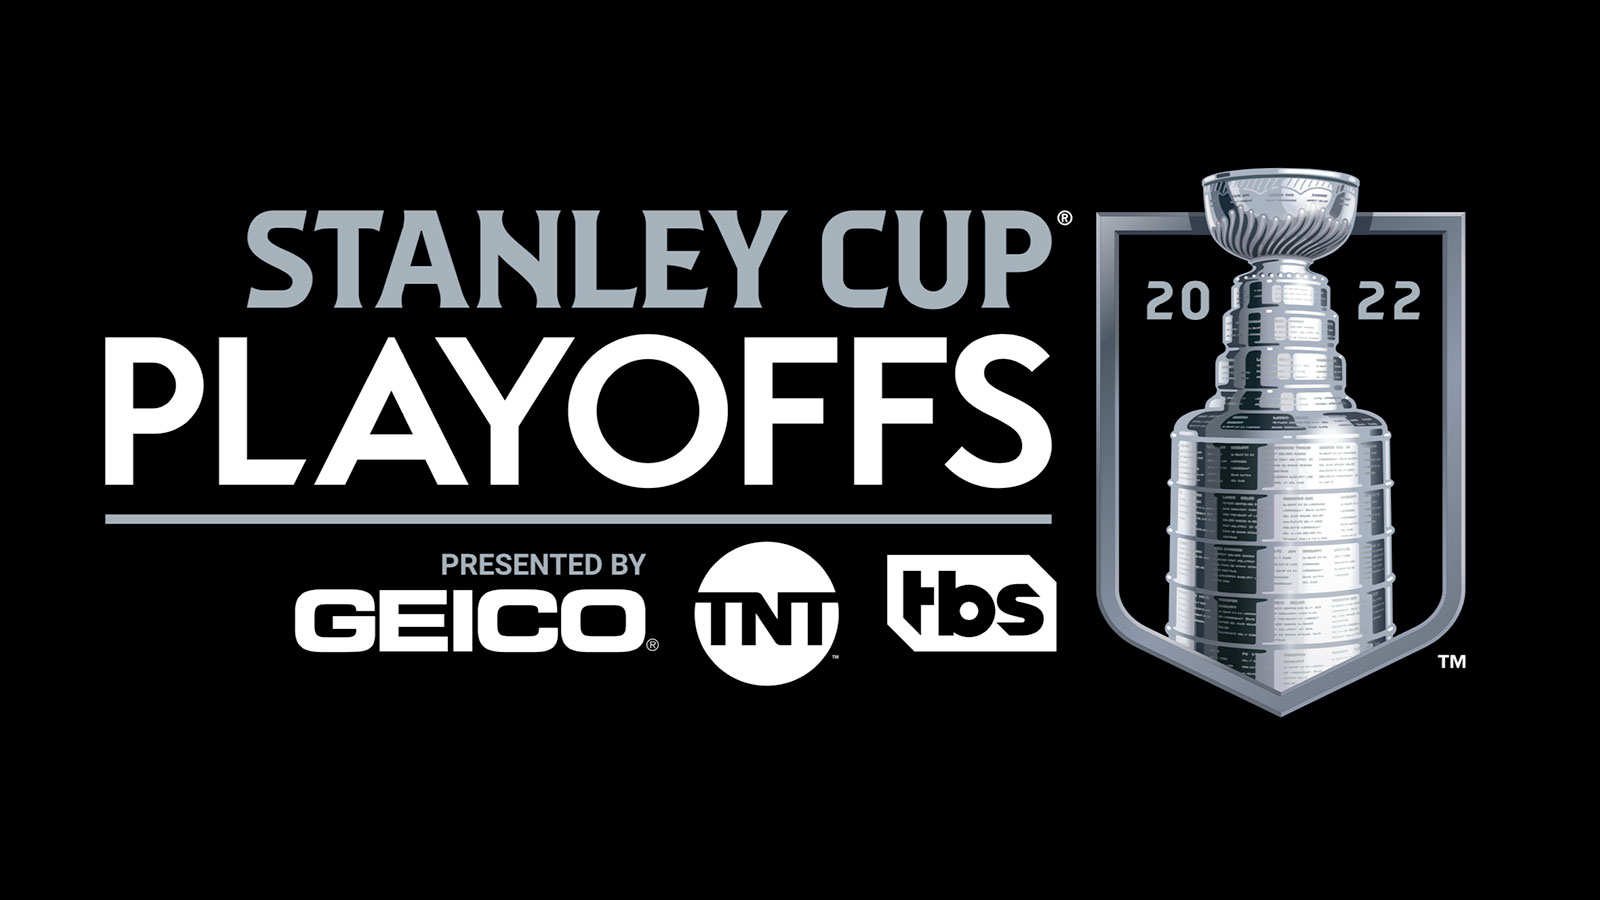 https://wbd.com/wp-content/uploads/2022/05/stanley-cup-playoffs-tnt-tbs-geico-1600x900-1.jpg